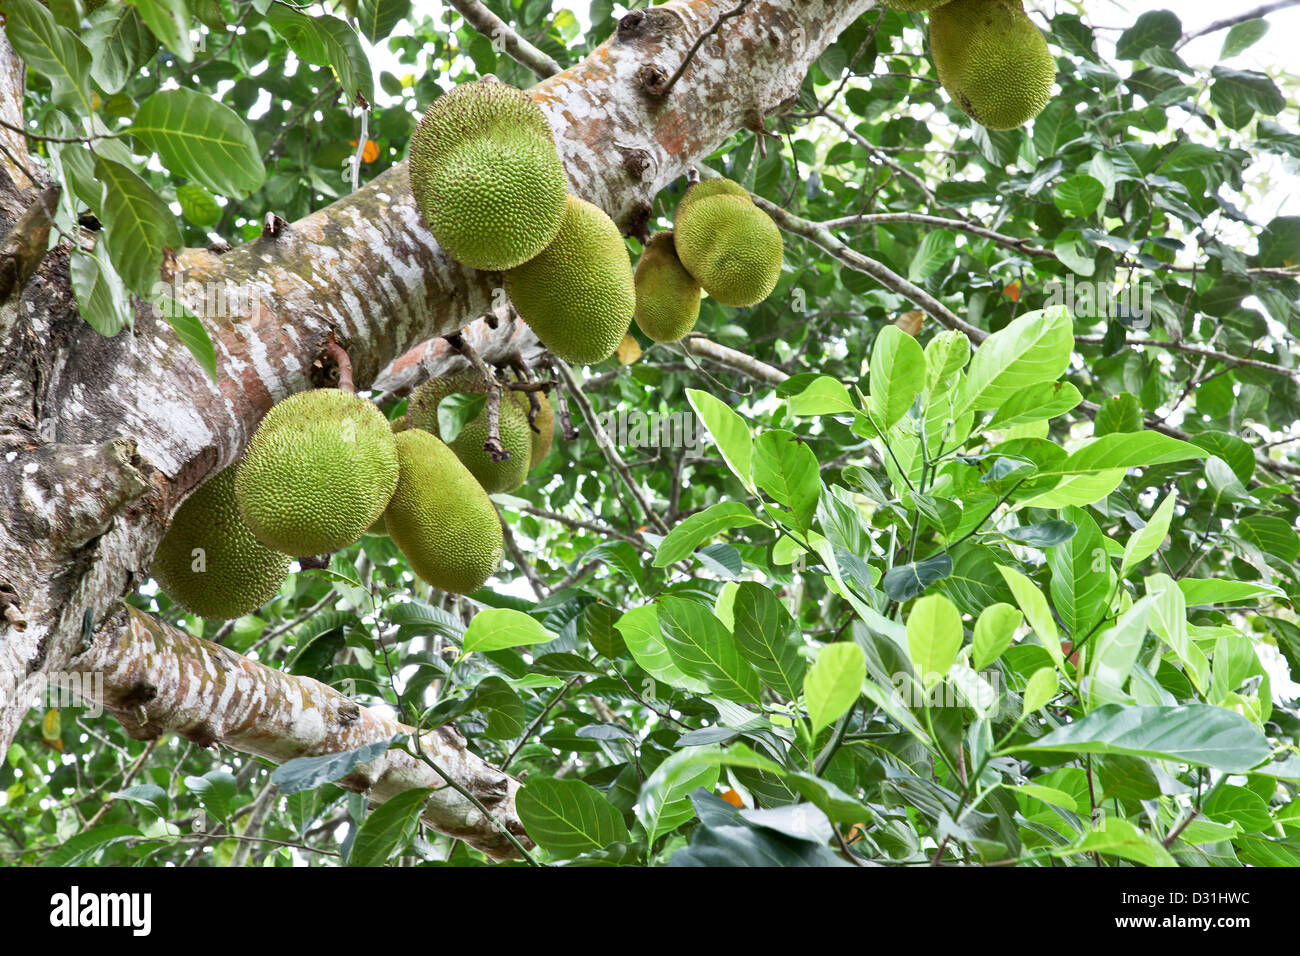 Zanzibar;Africa;Jackfruit;fruit;vegetables;herds grown on Organic Farms Stock Photo